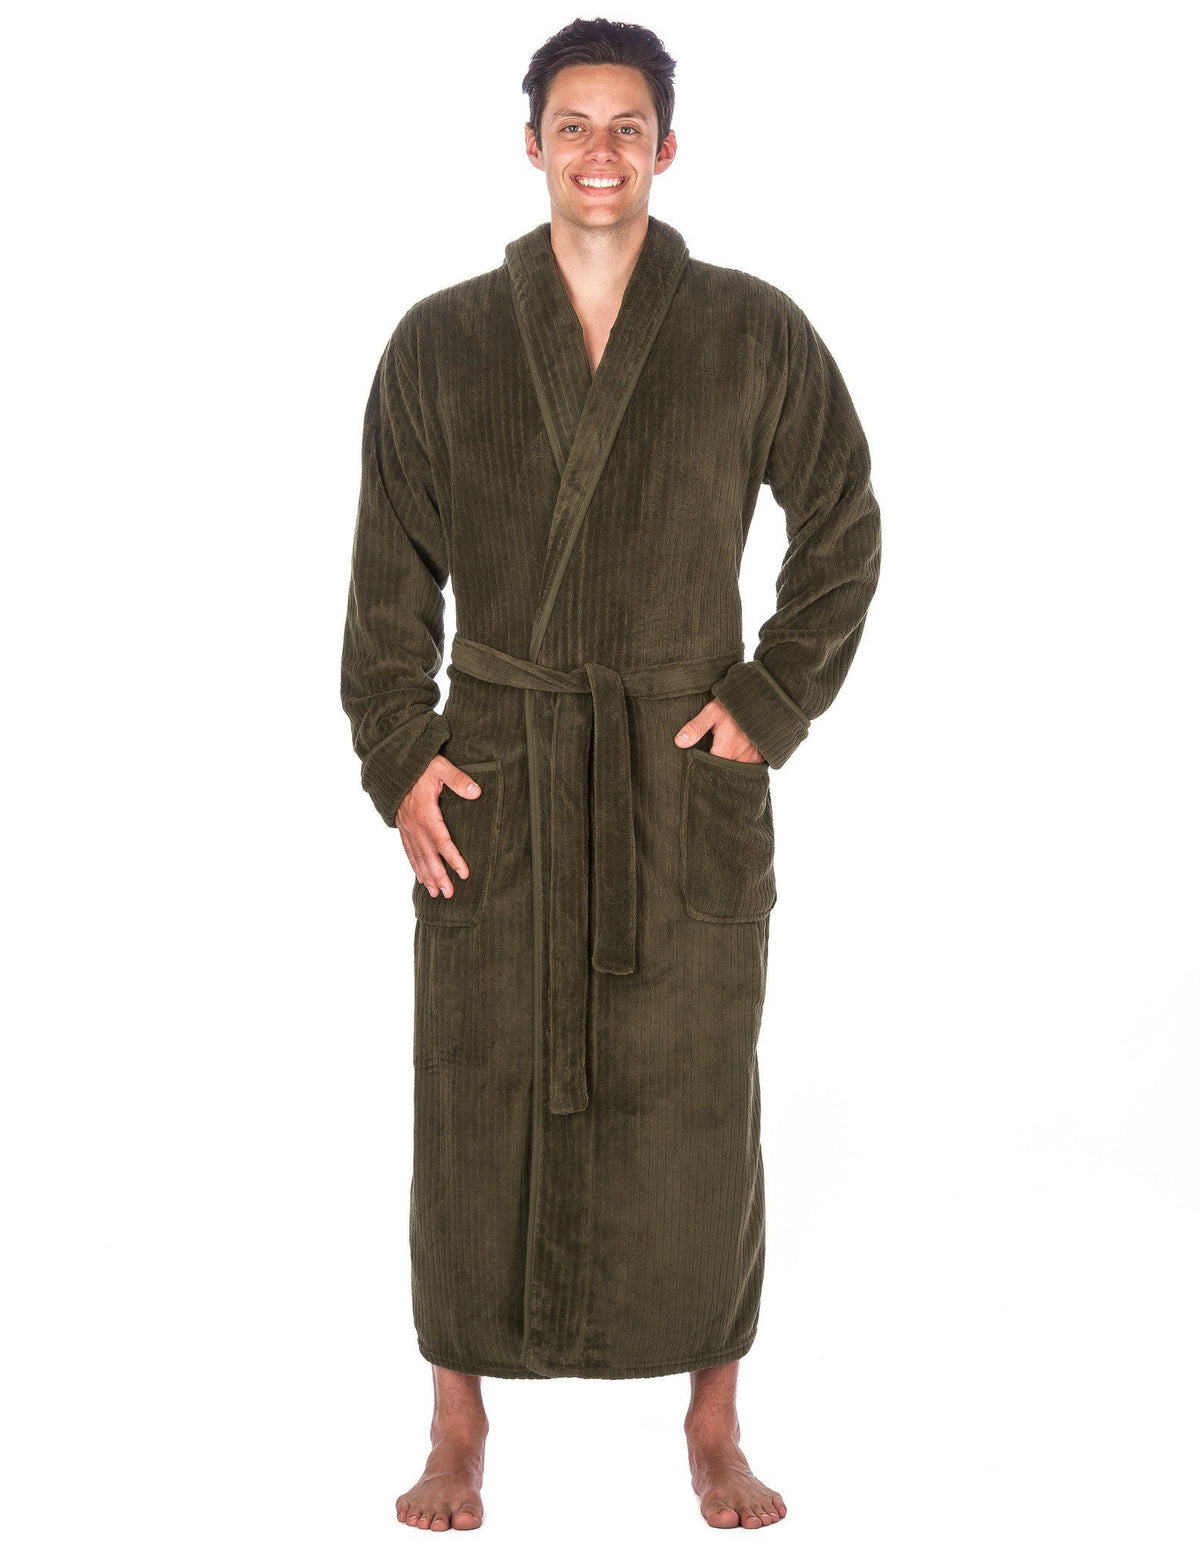 Men's Premium Coral Fleece Long Hooded Plush Spa/Bath Robe - Olive